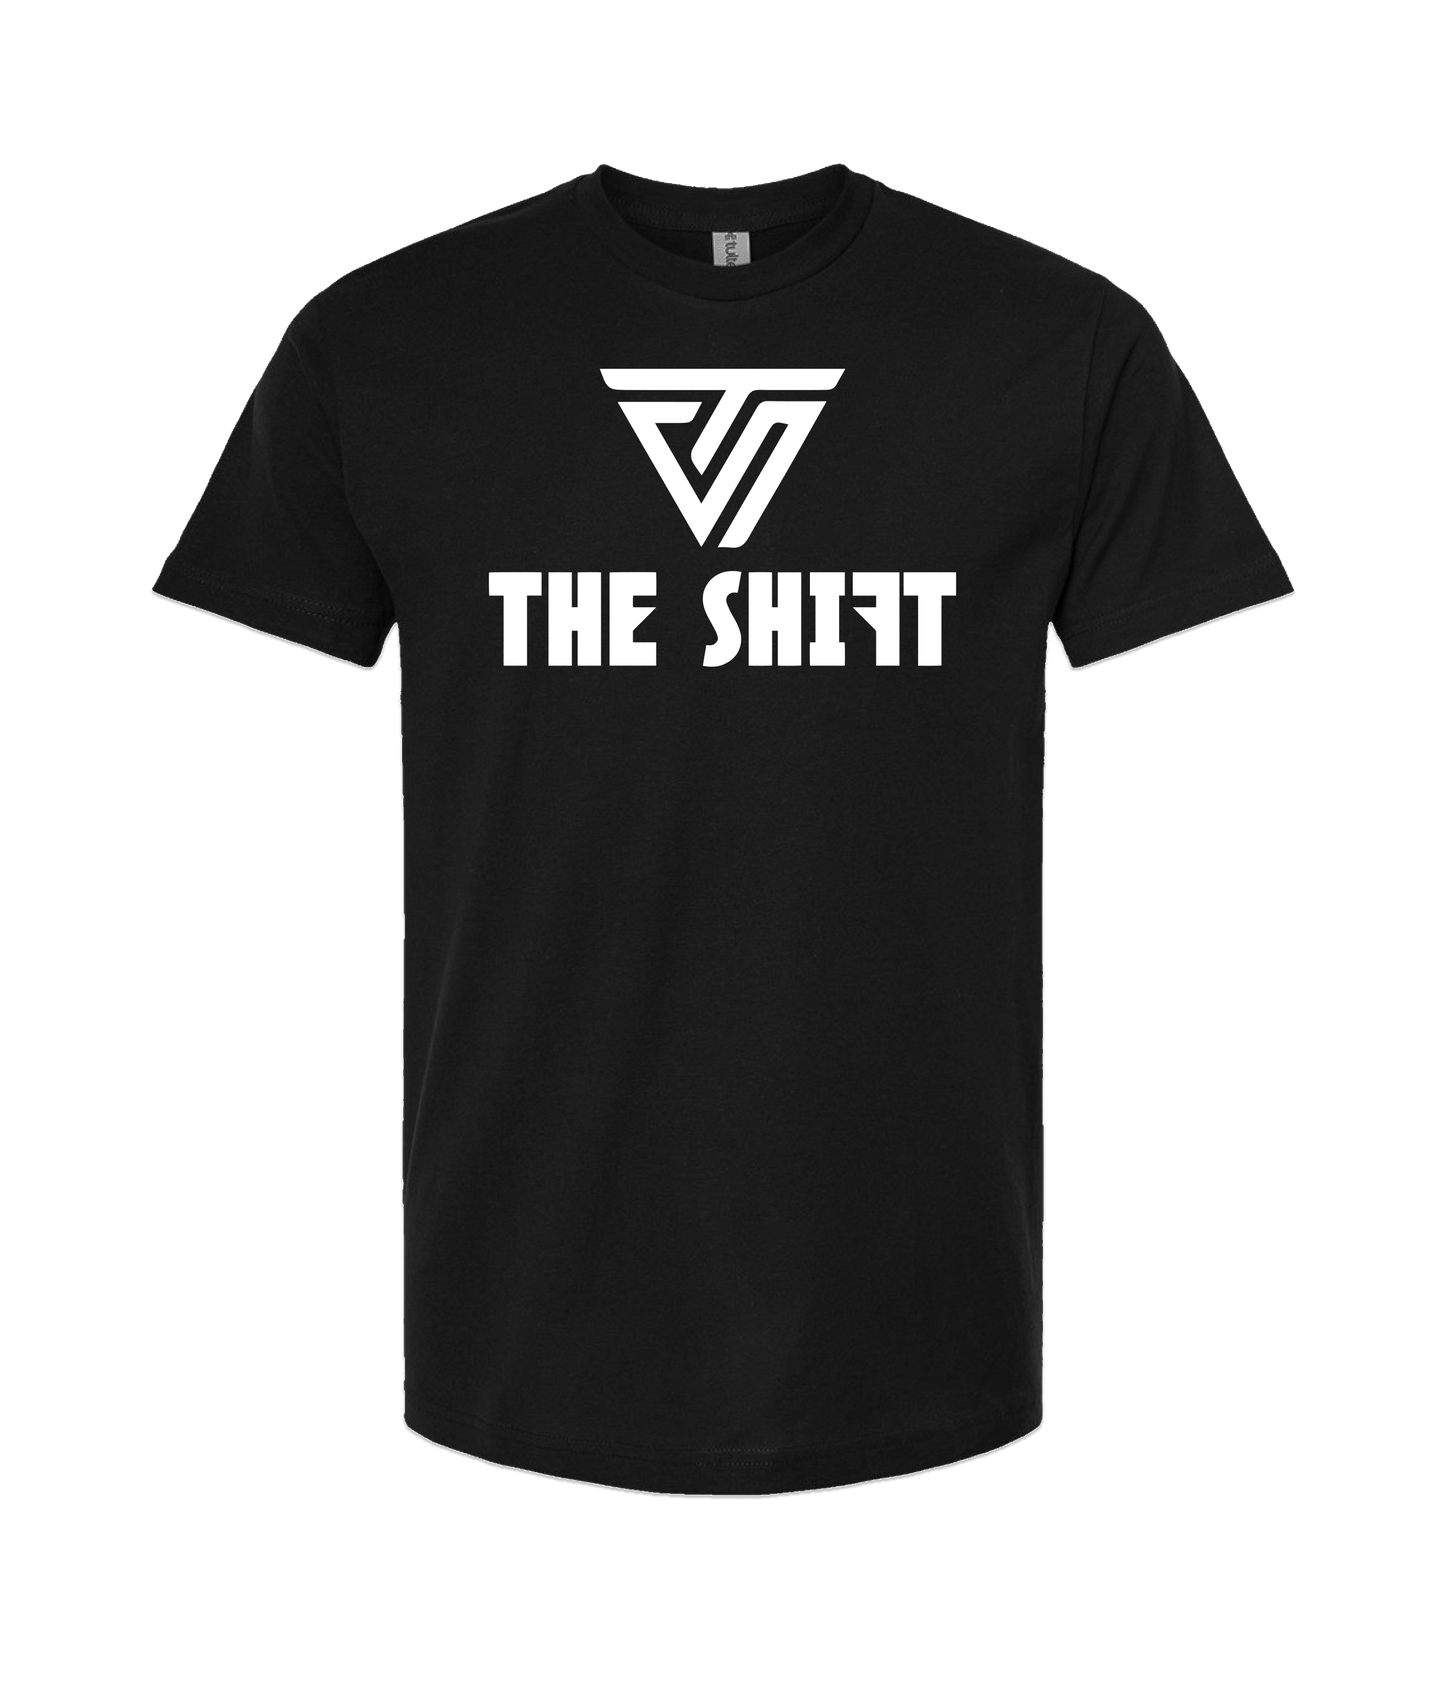 TheShift - Be The Shift - Black T-Shirt